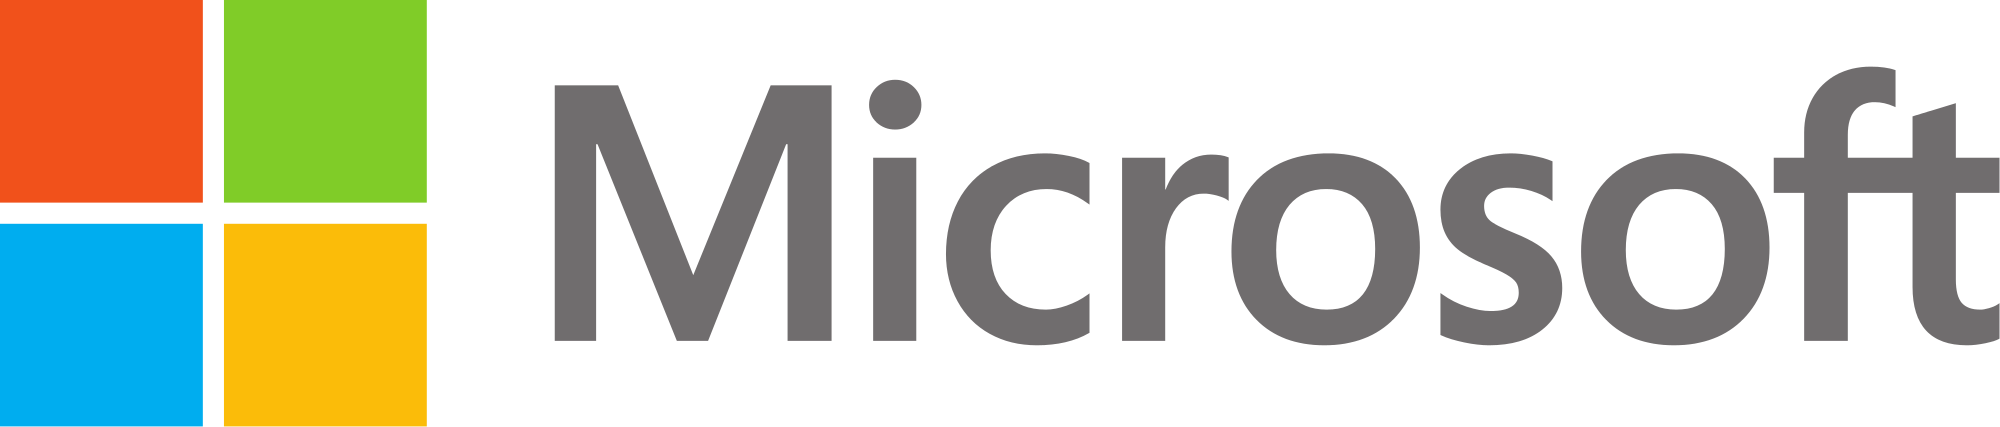 Download PNG image - Microsoft Logo PNG Image 